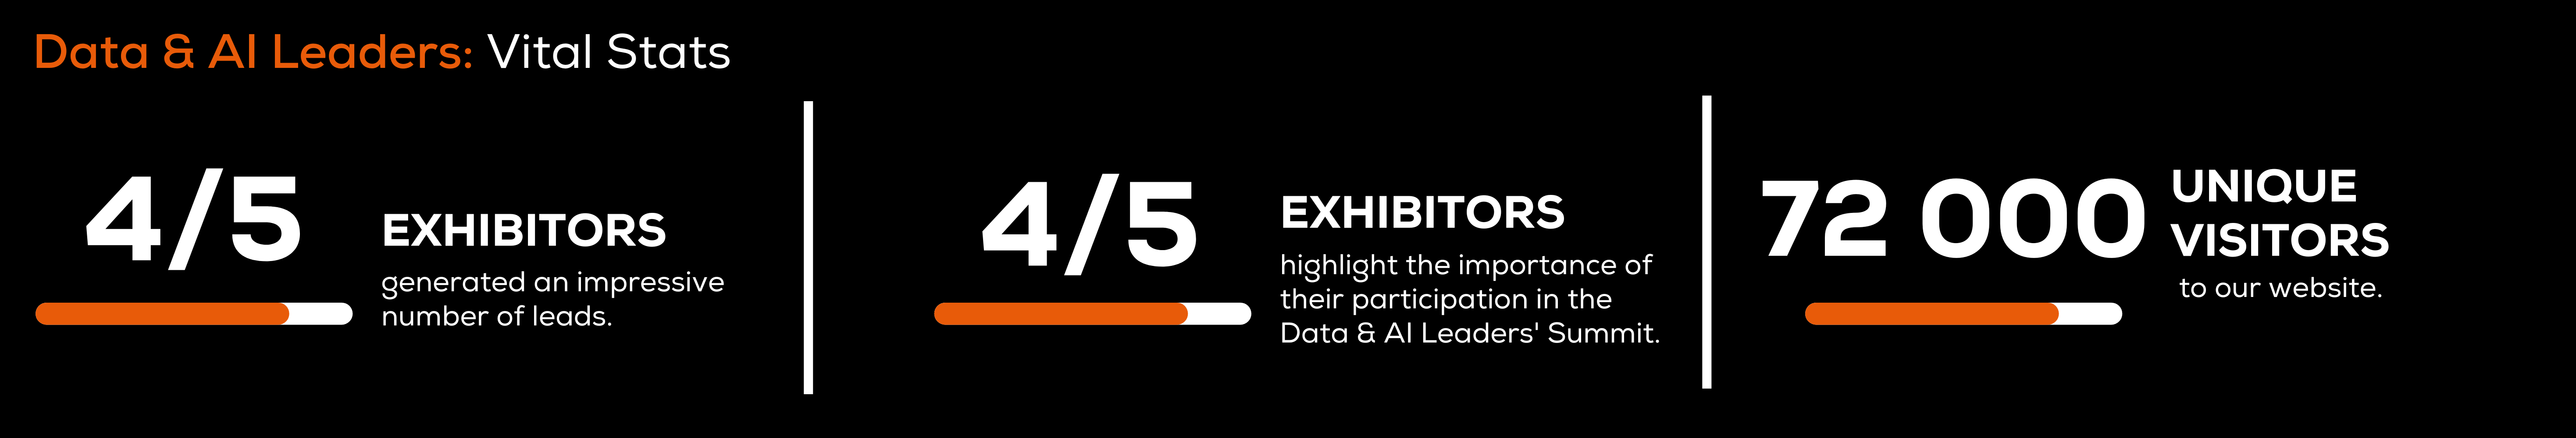 Data & AI Leaders Summit: Vital Stats 